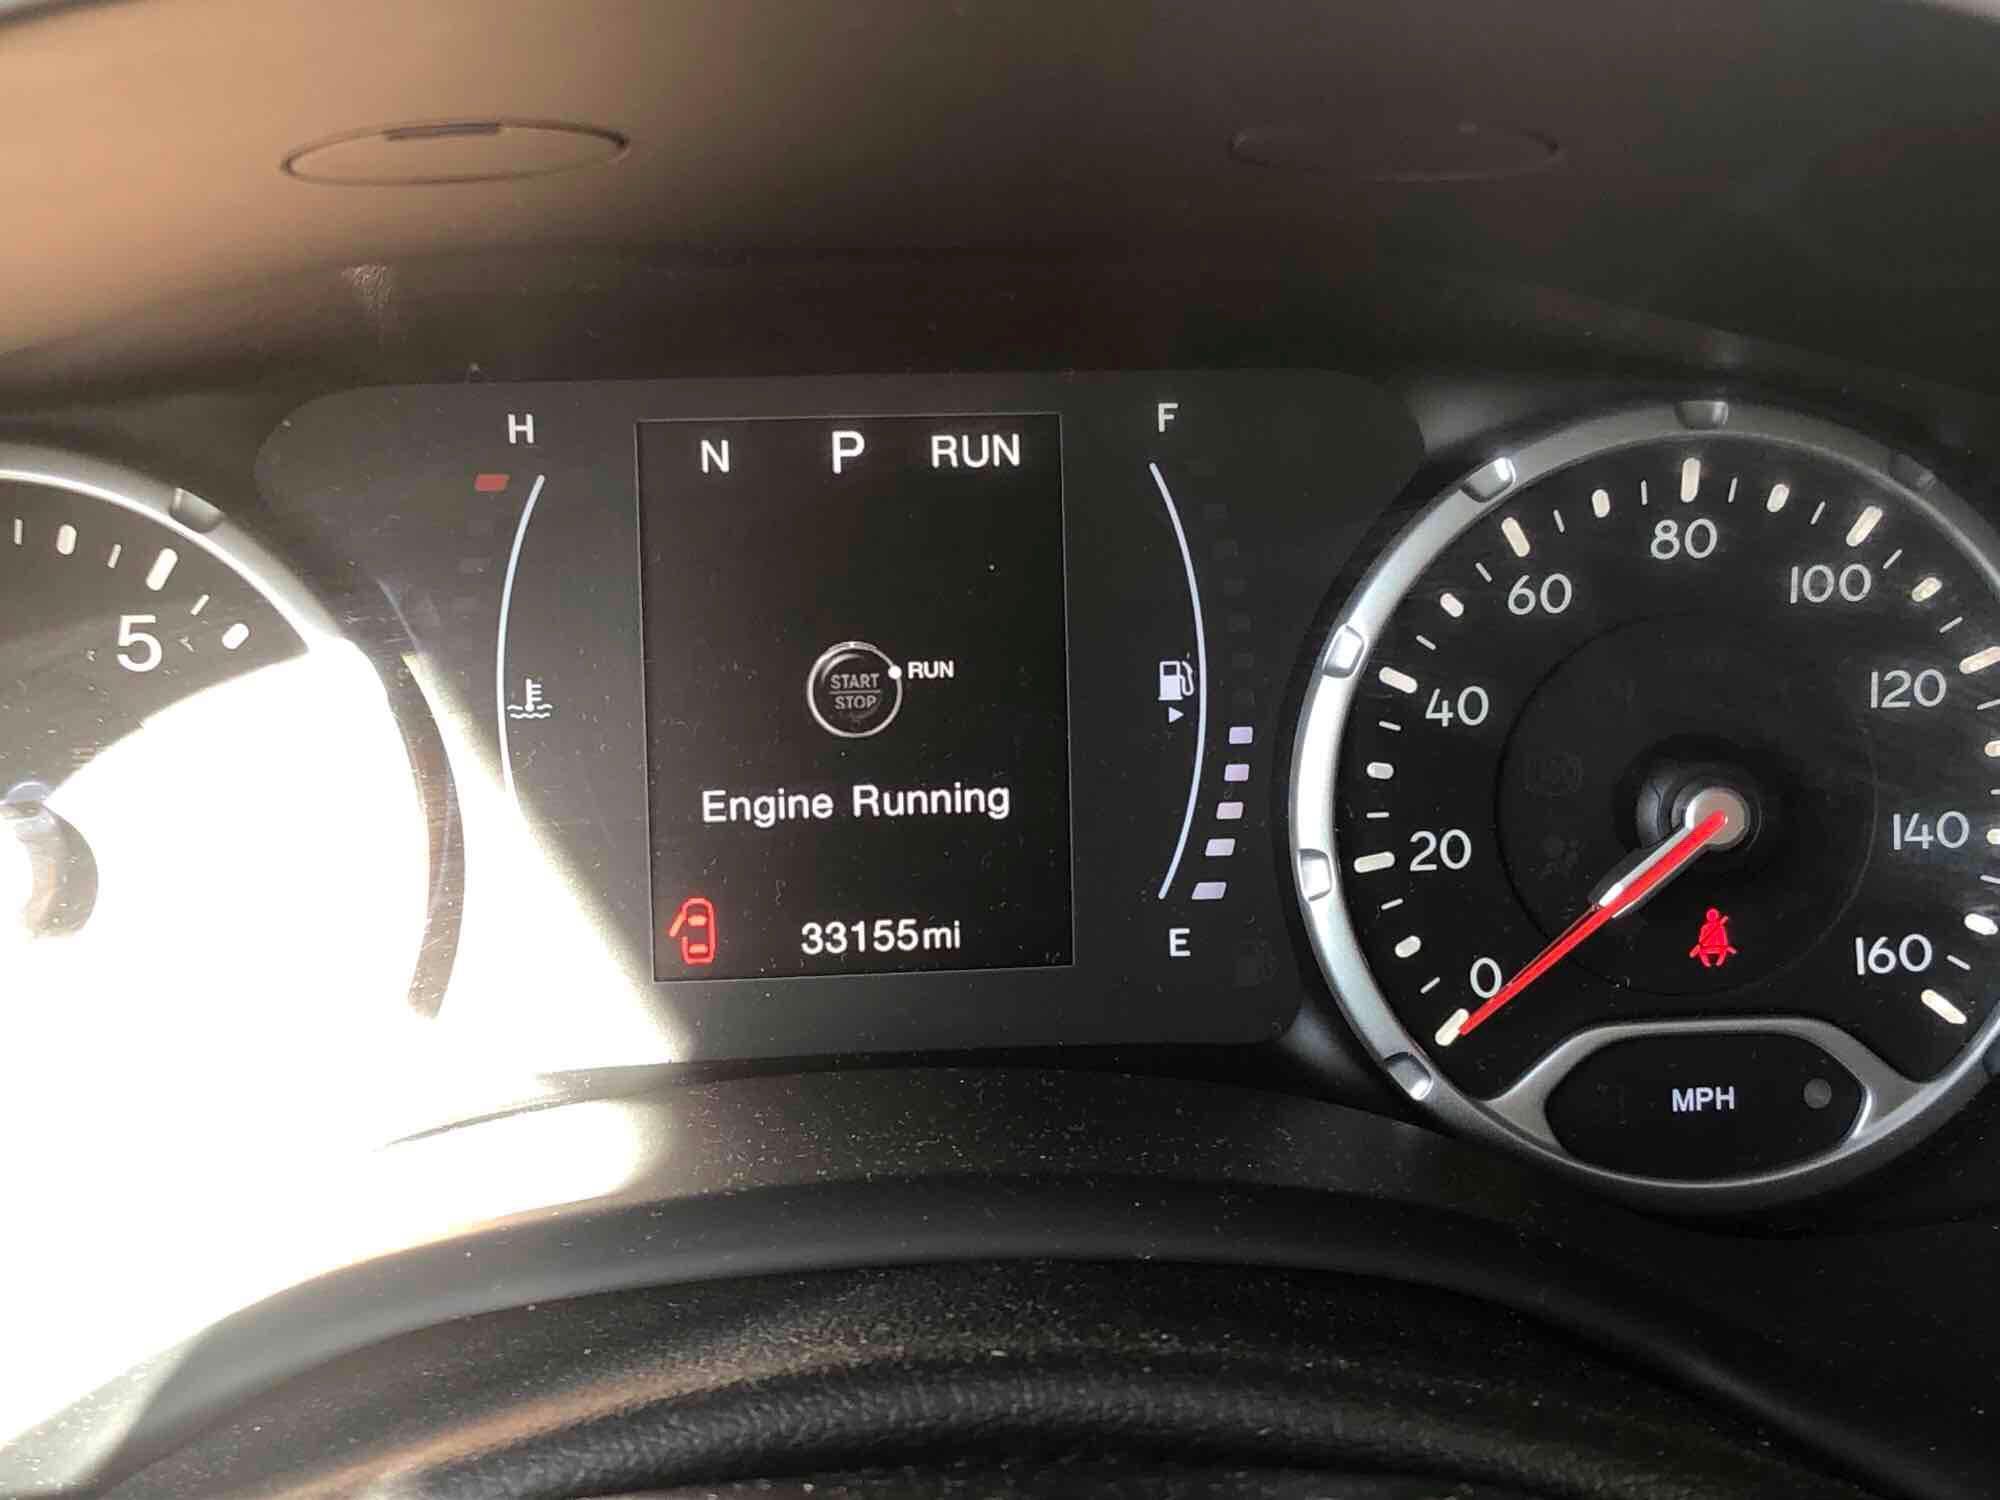 2017 Jeep Renegade. 33,155 miles. Runs. needs a new battery